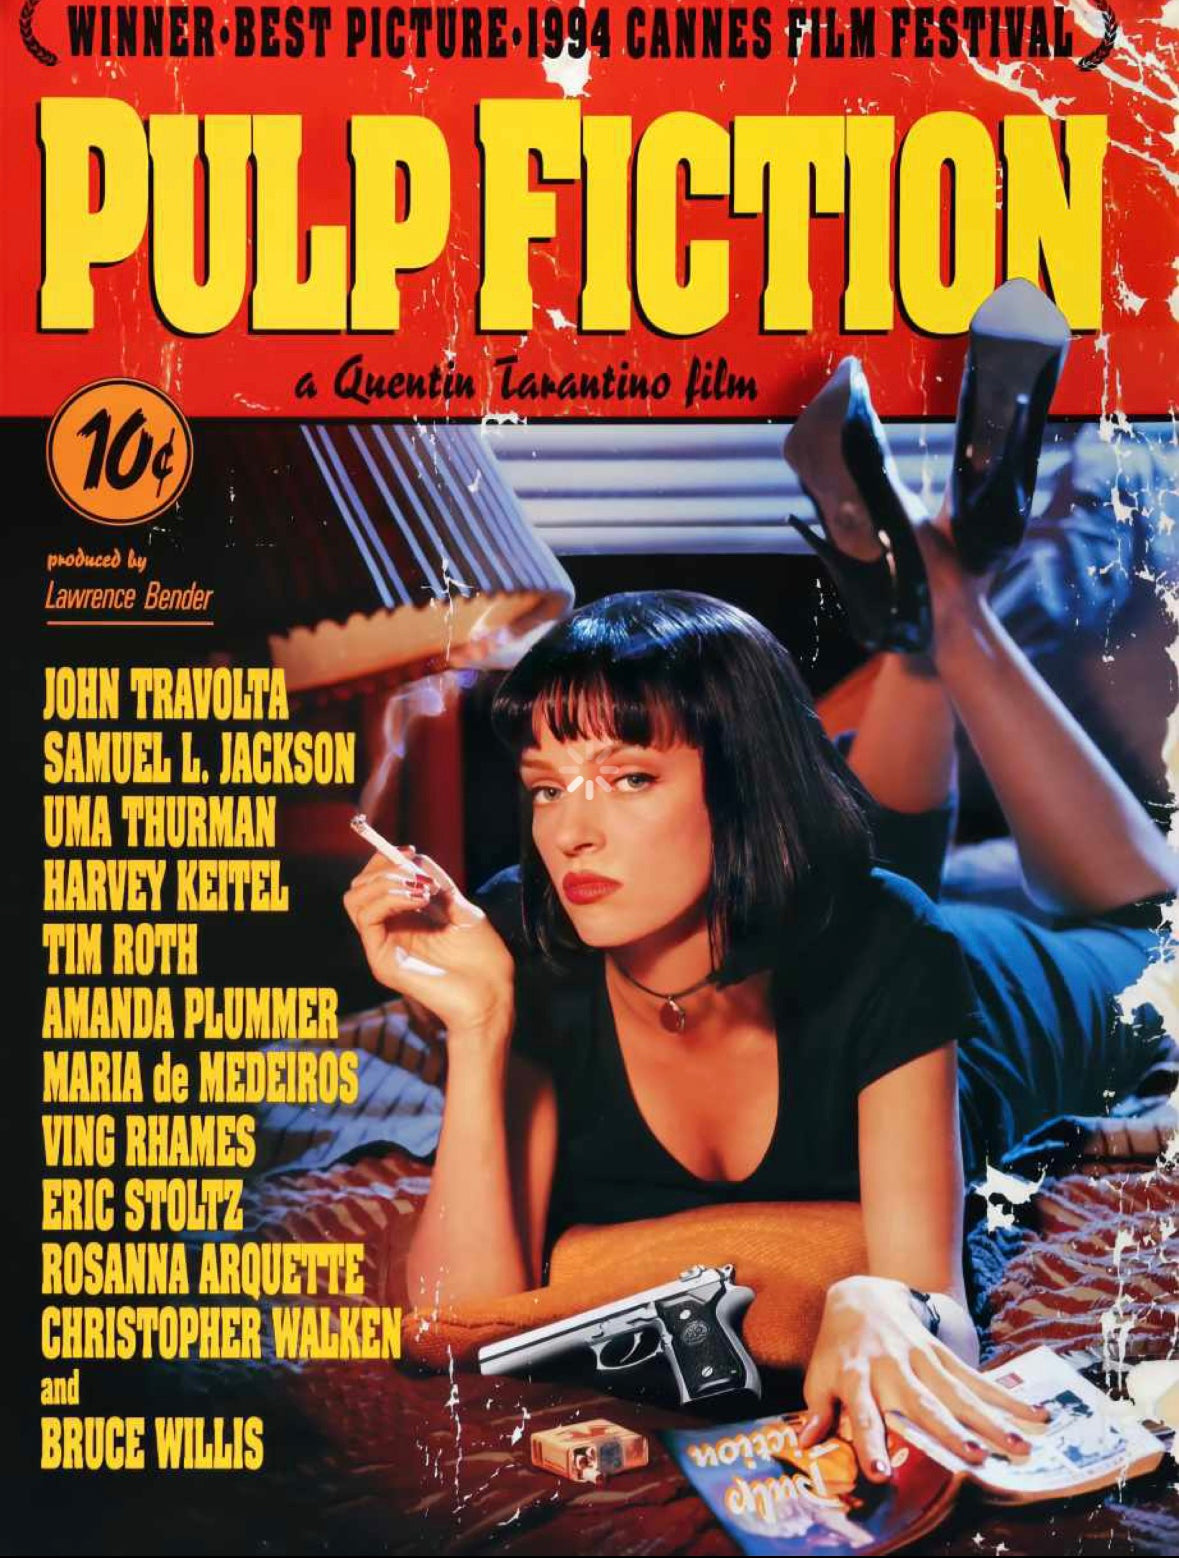 Pulp fiction movie poster 120x160cm